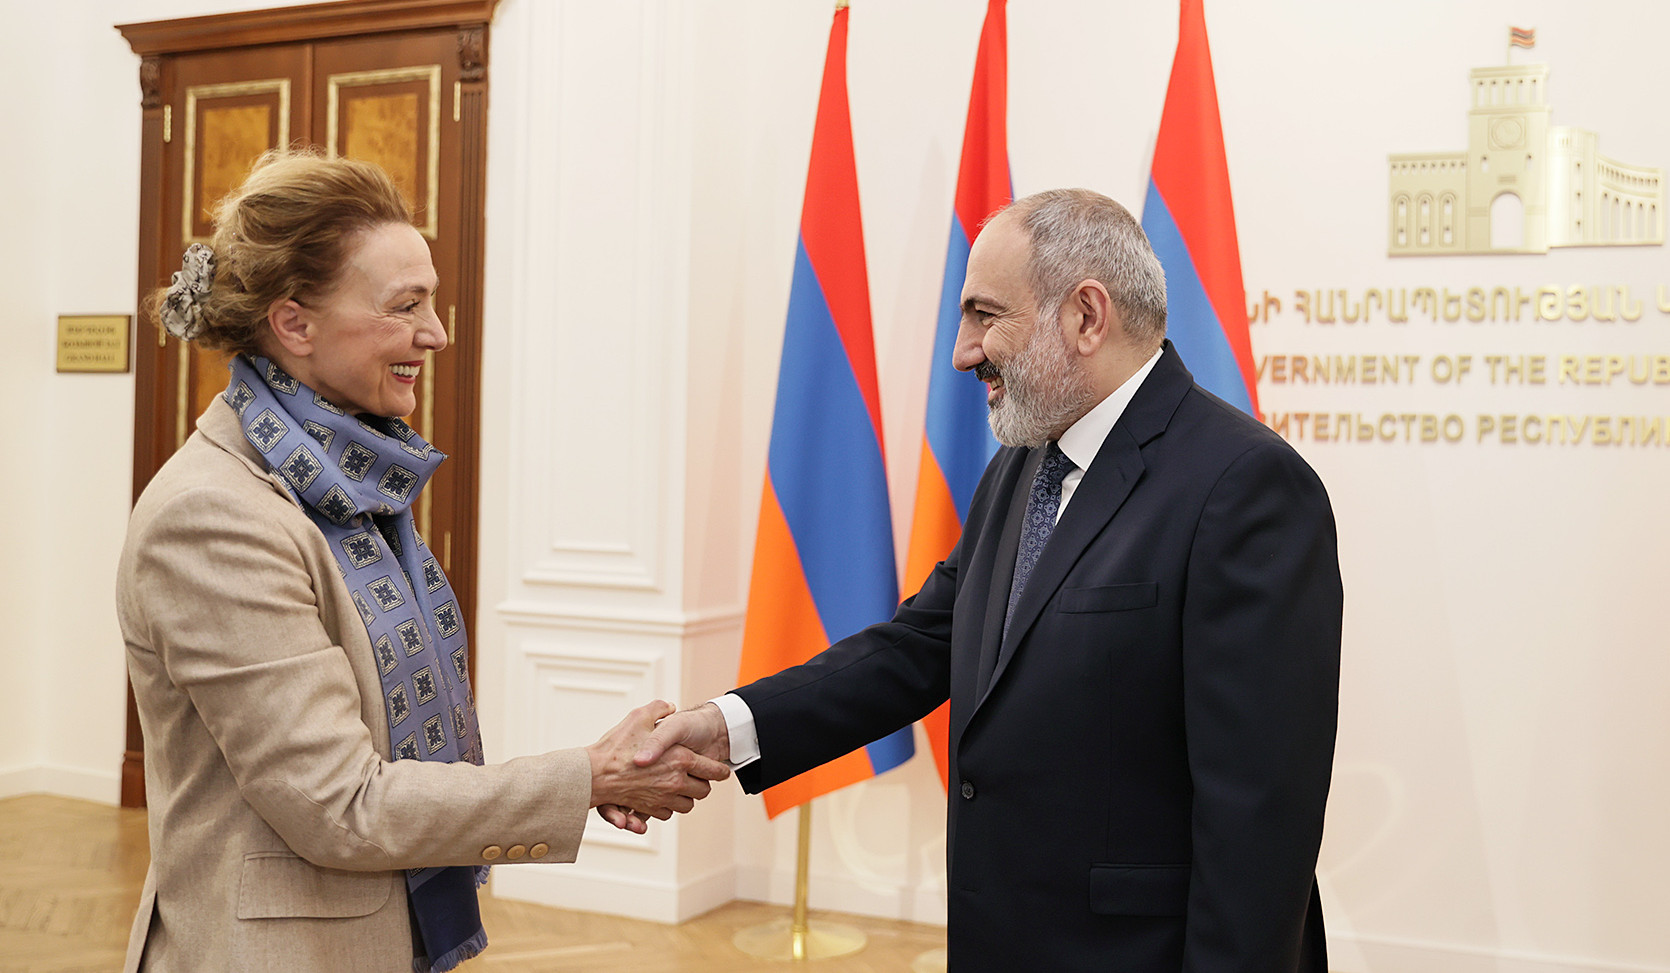 Prime Minister Pashinyan hosts Marija Pejčinović Burić, the Secretary General of the Council of Europe